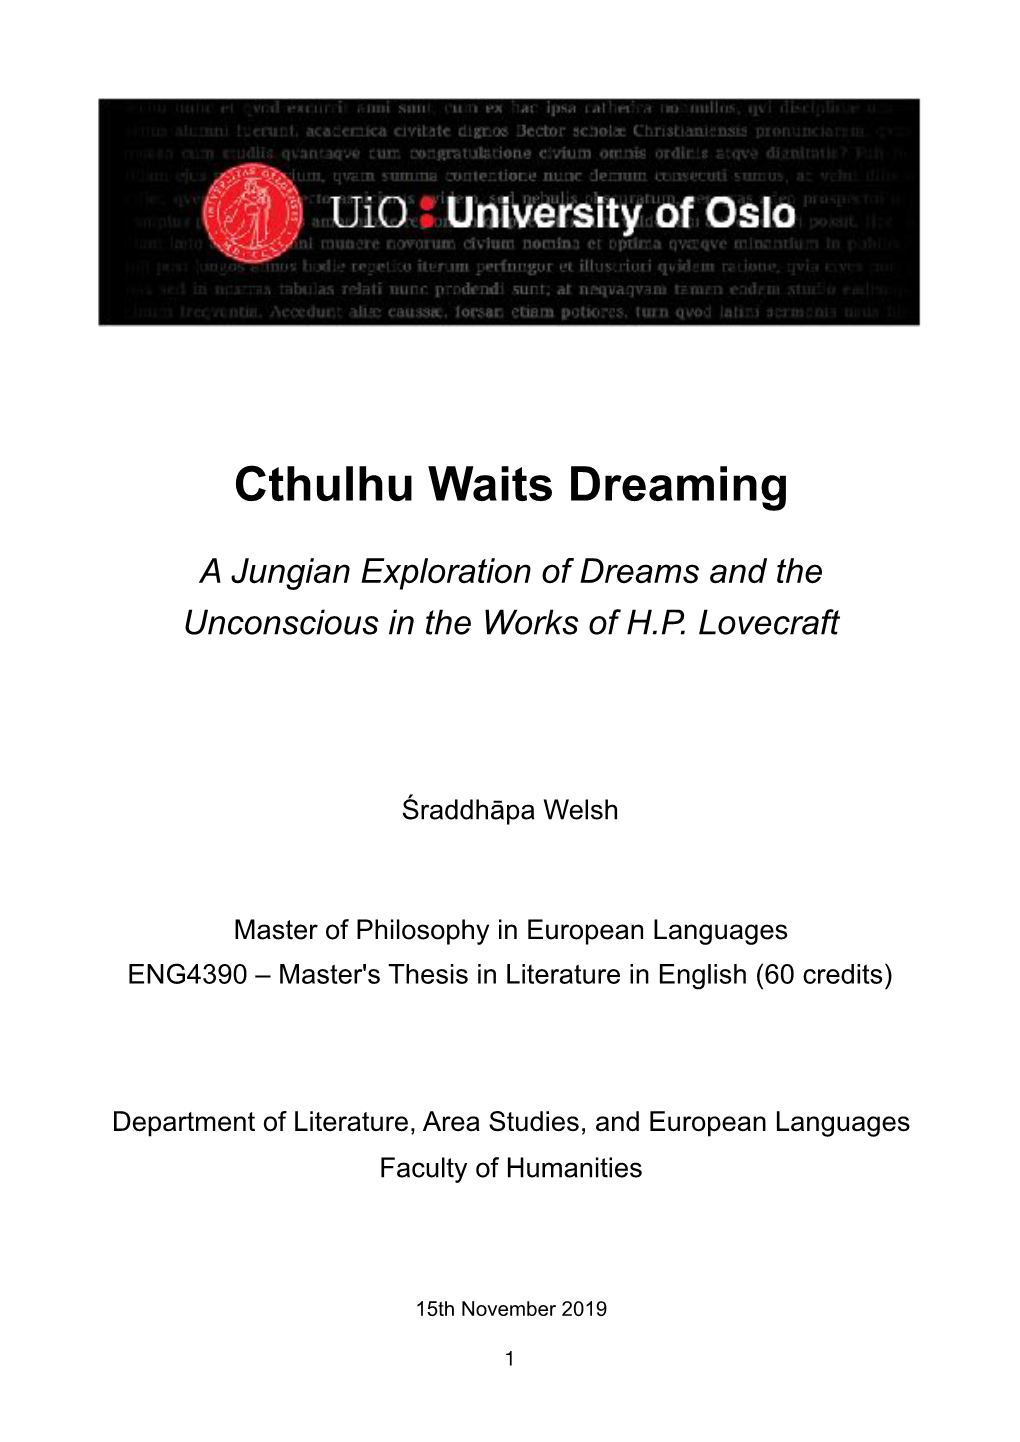 Cthulhu Waits Dreaming a Jungian Exploration of Dreams